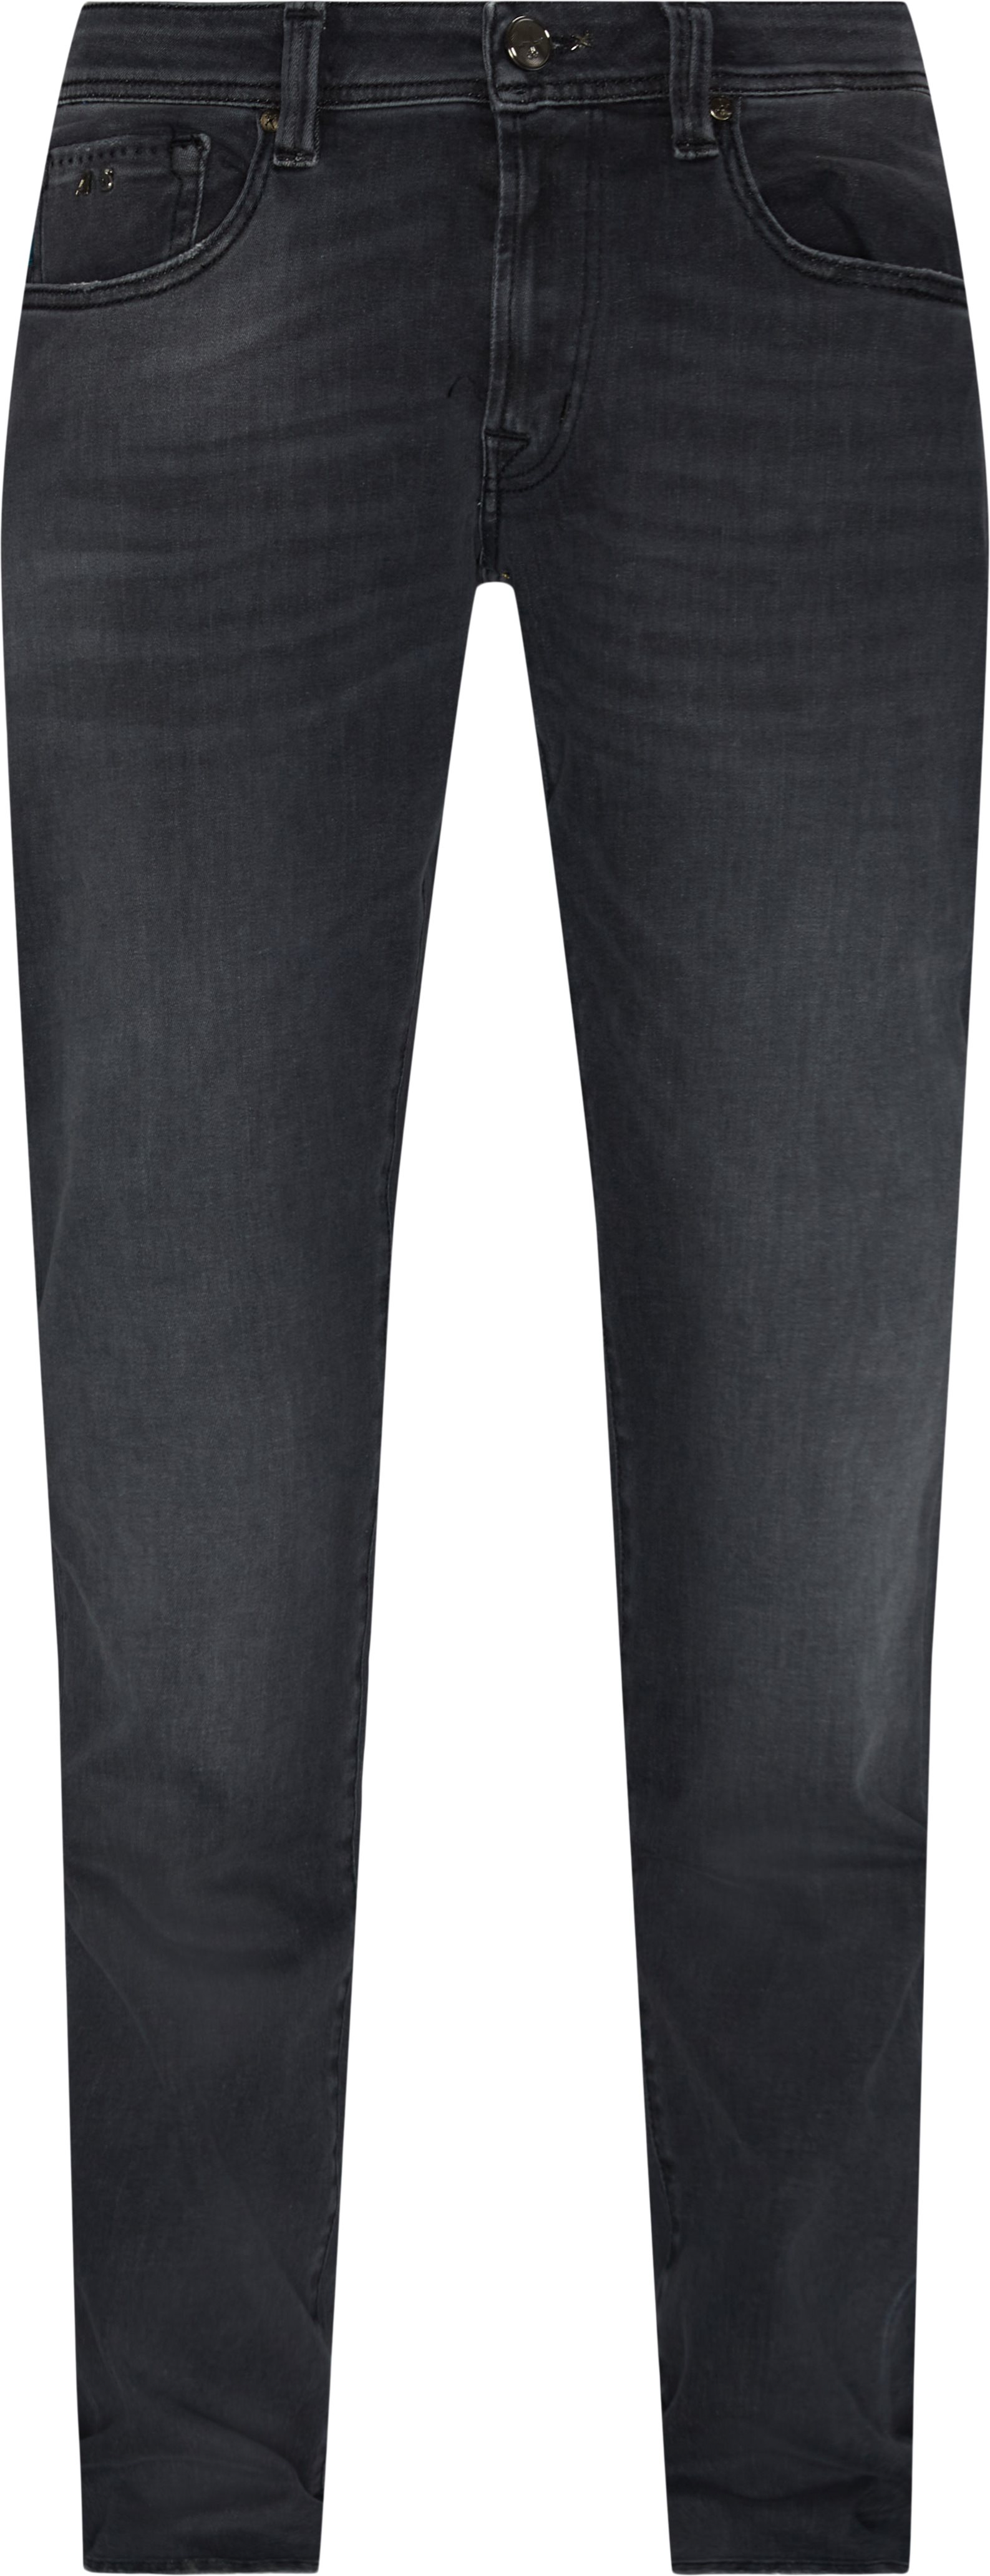 Michelangelo Jeans - Jeans - Slim fit - Grey